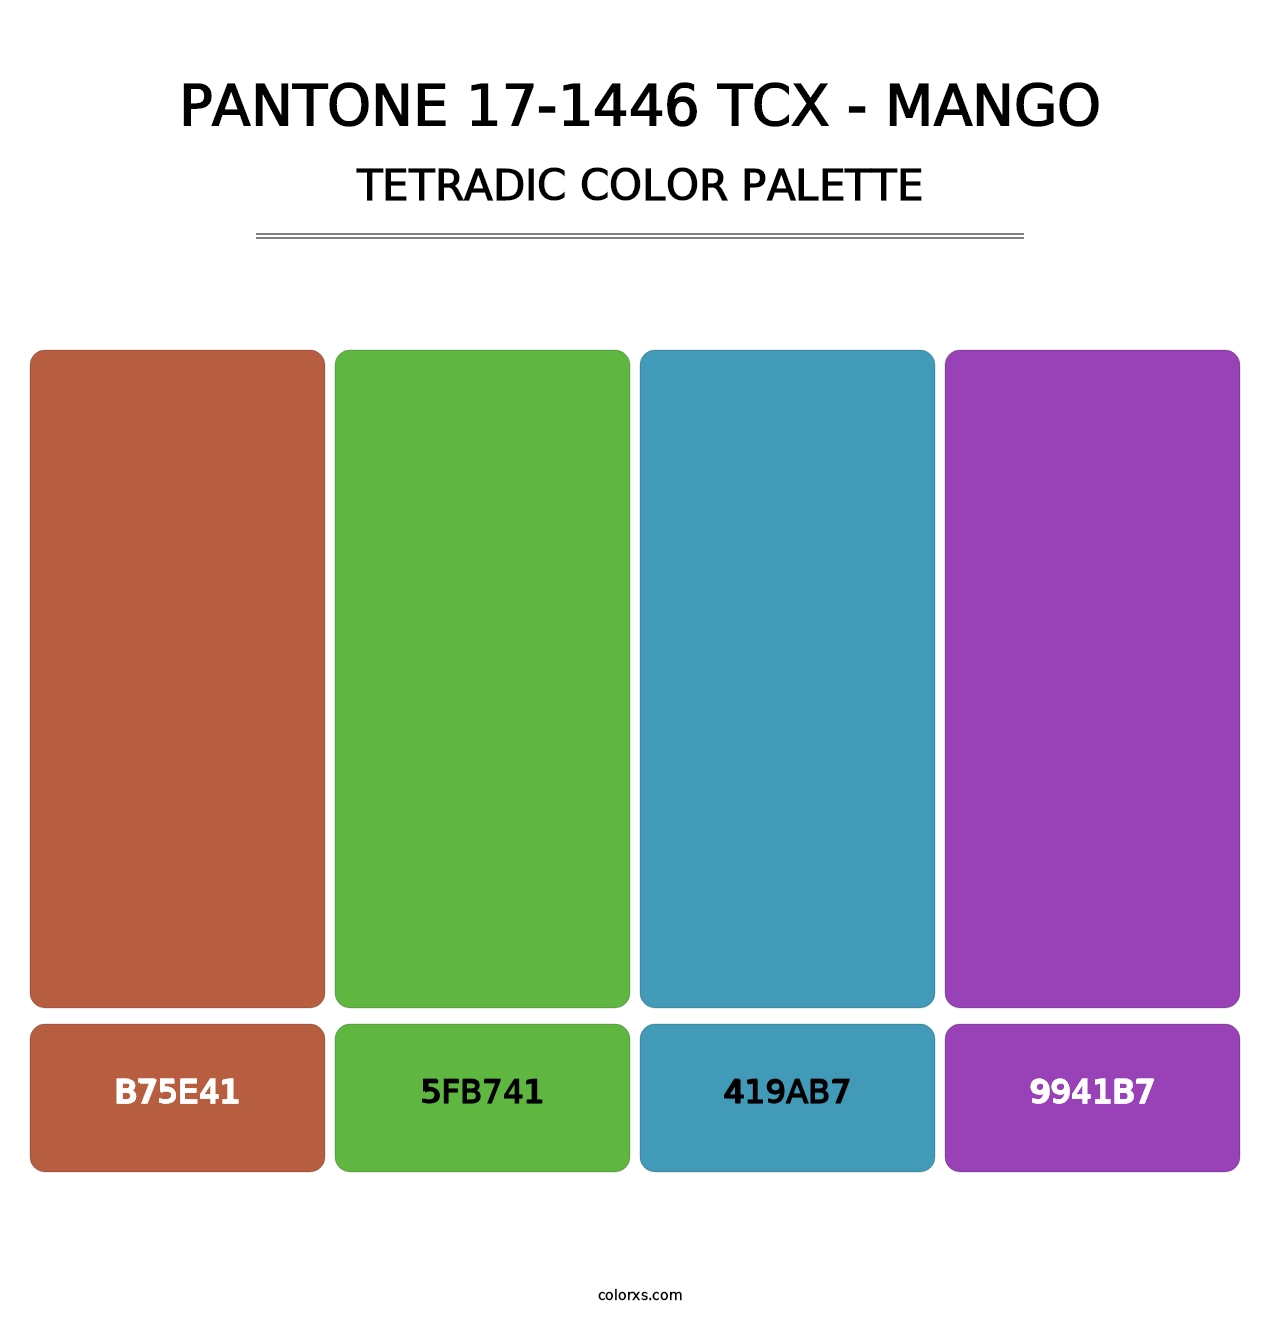 PANTONE 17-1446 TCX - Mango - Tetradic Color Palette